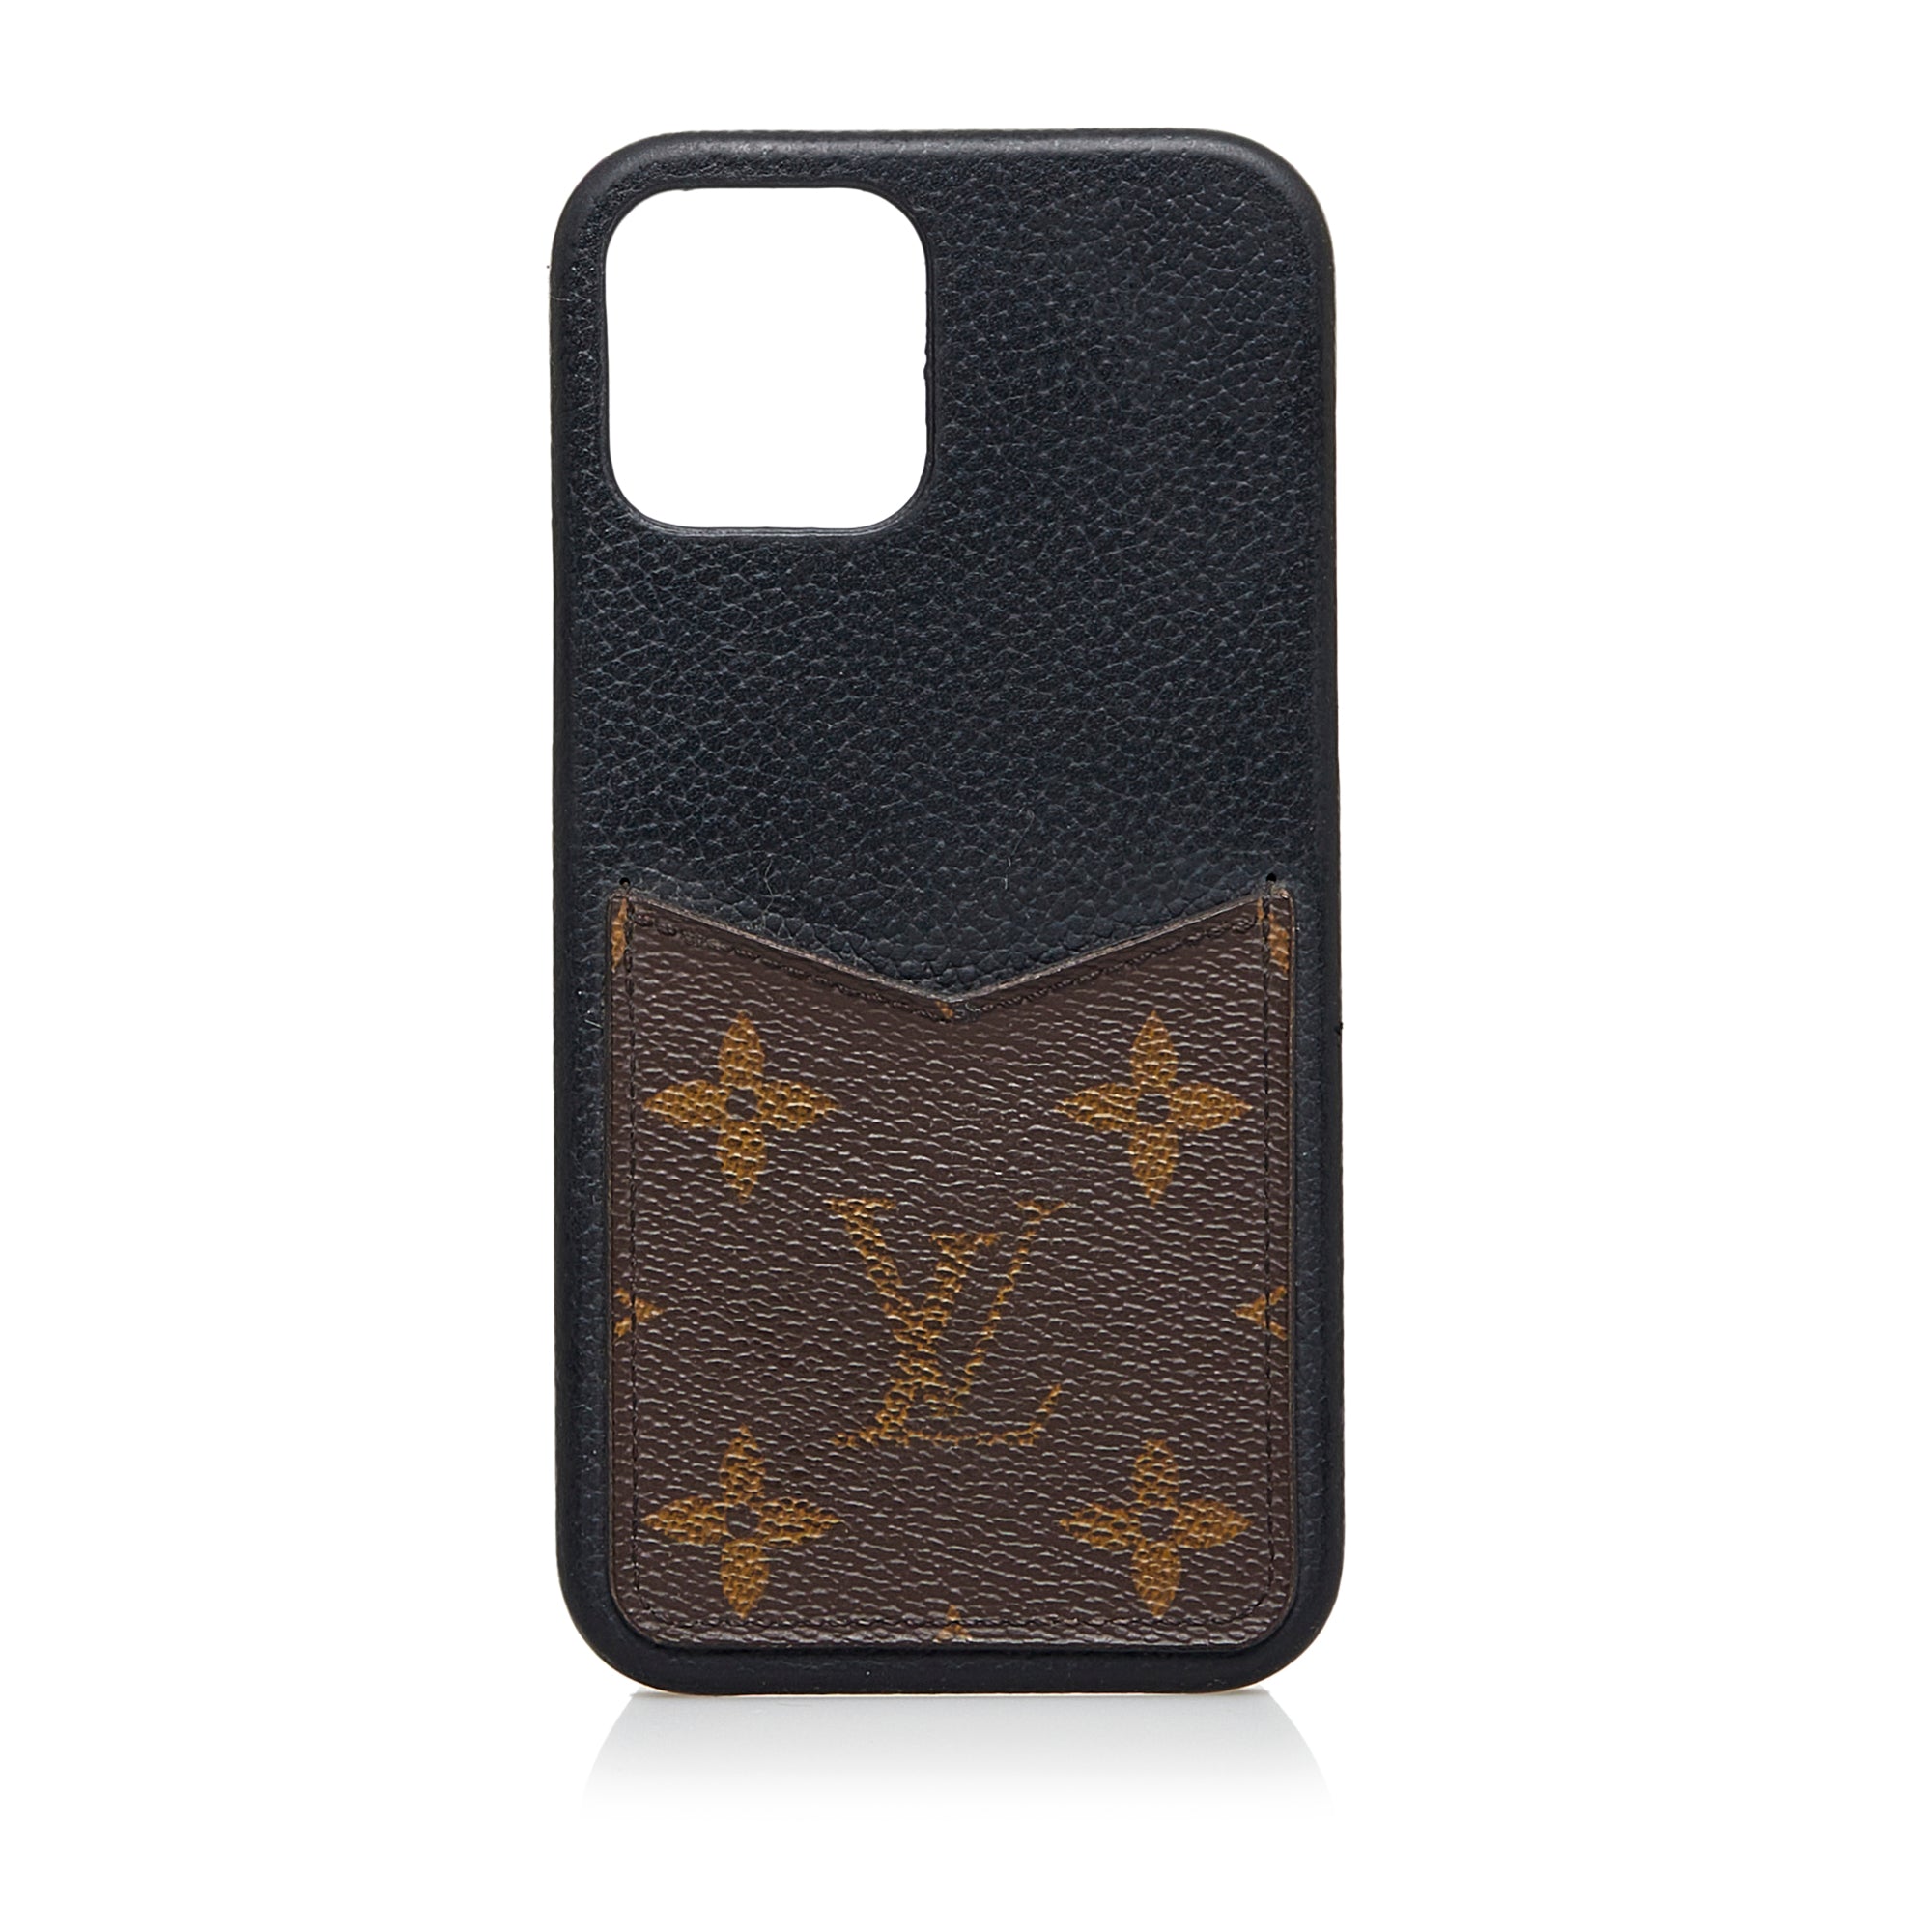 Louis Vuitton iPhone 12 Pro Max Cases